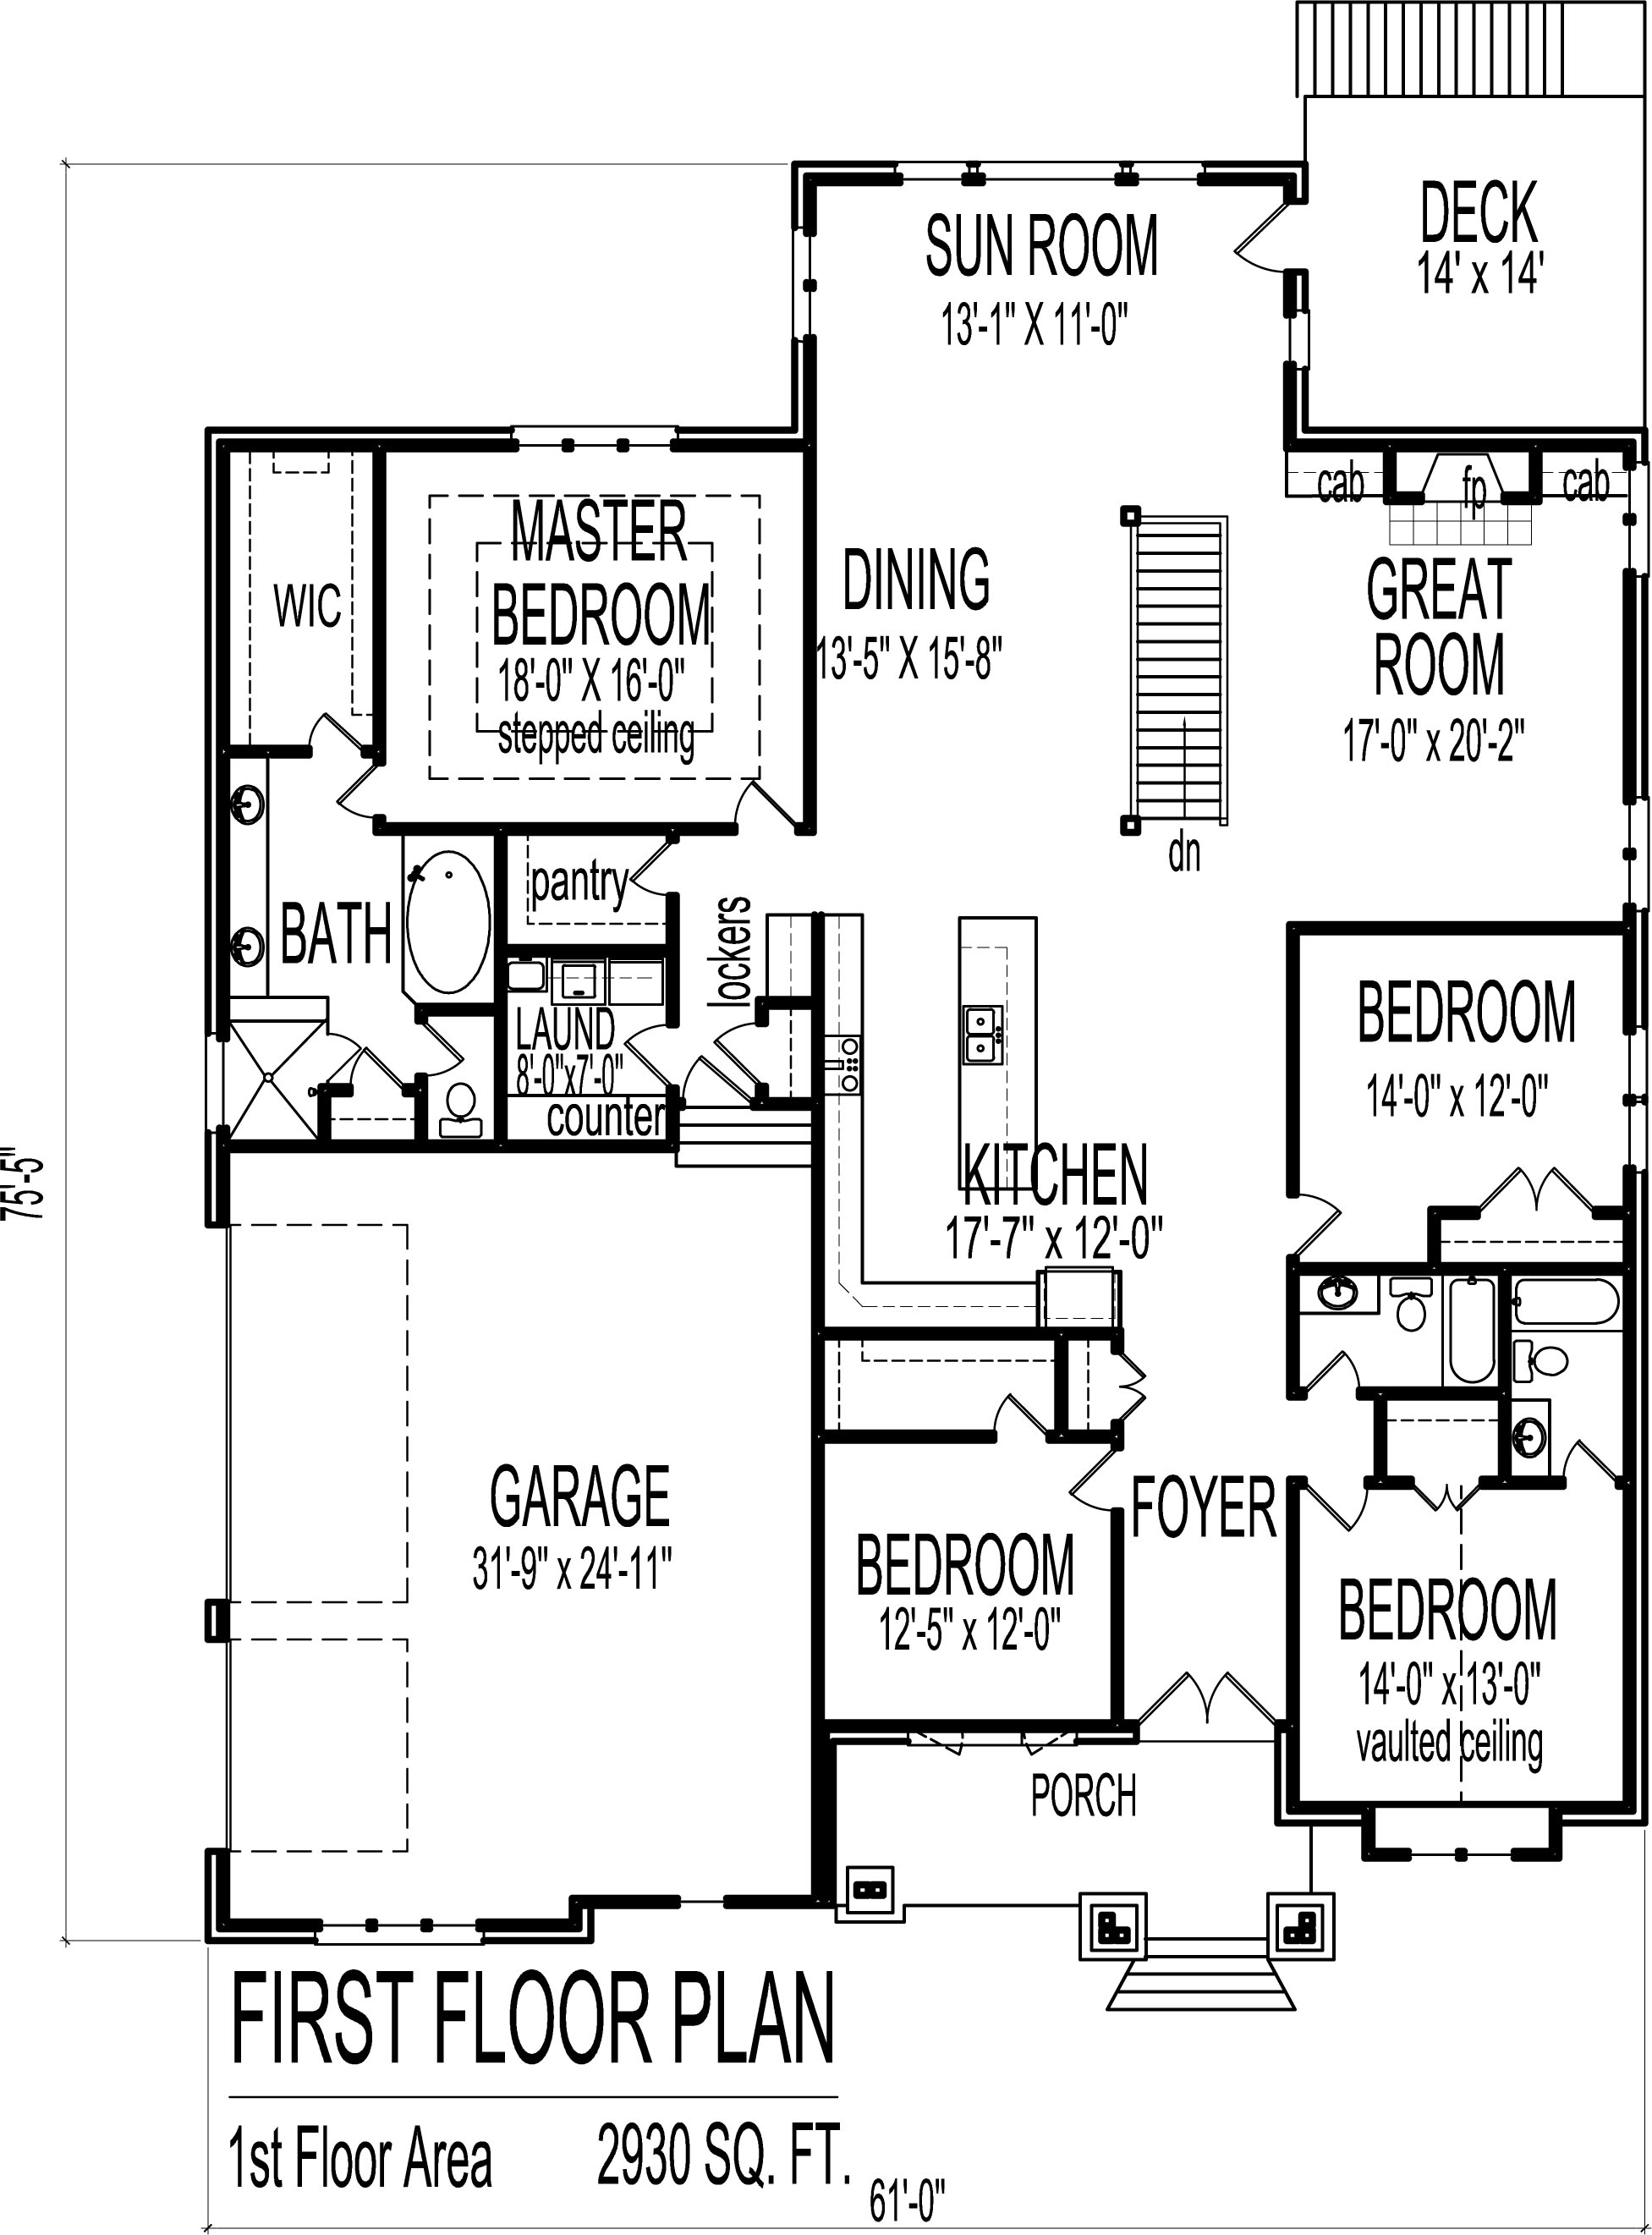 4 Bedroom Luxury Bungalow House Floor Plans Architectural